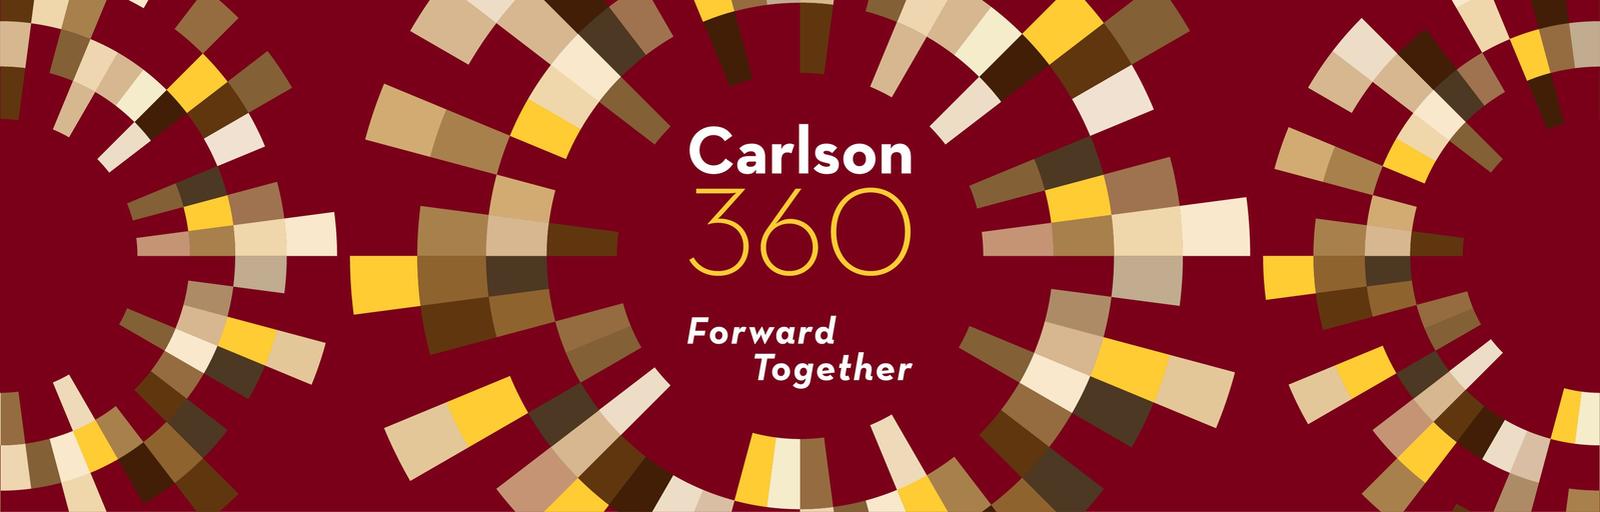 Carlson360 Web header 1600x512px